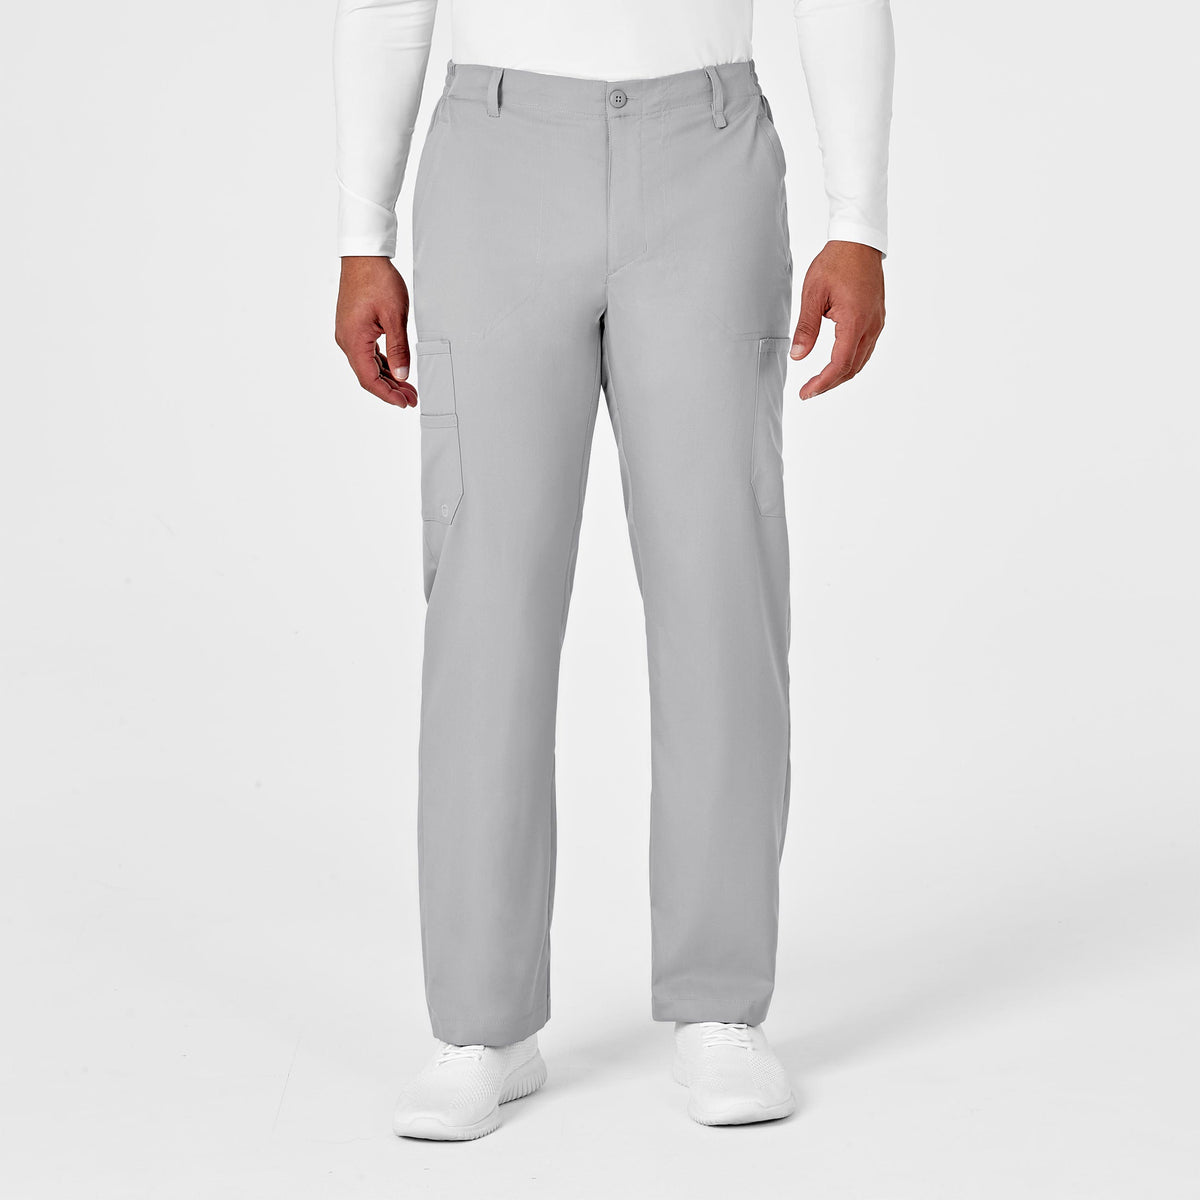 Illinois ave Unisex Athletic Cargo Scrub Pants Gray Tall Size XL